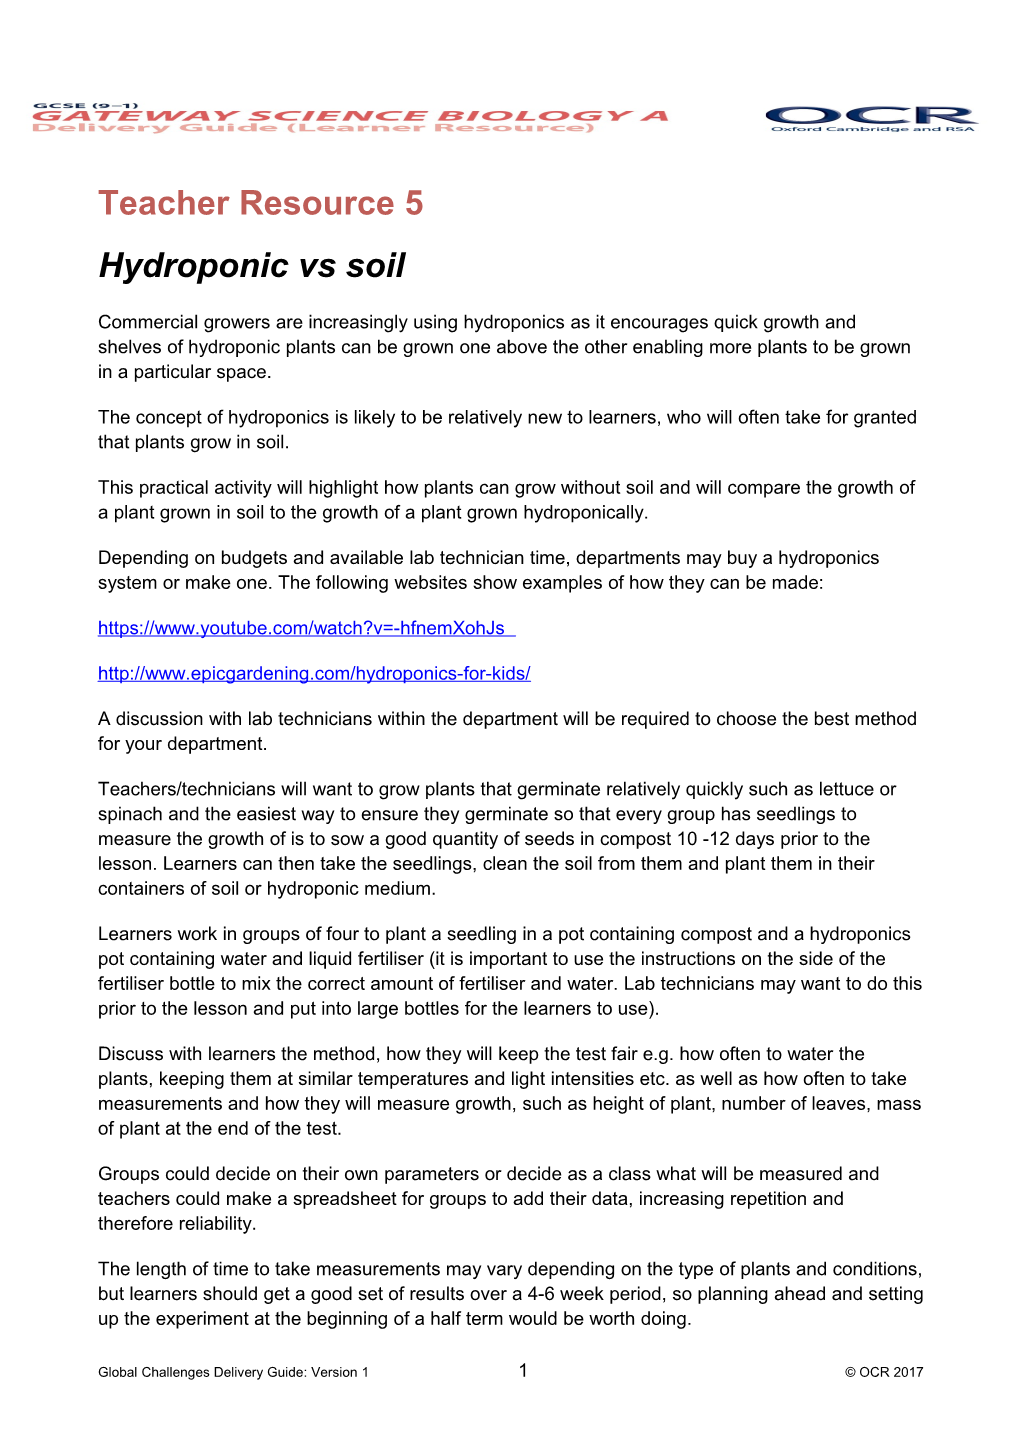 Teacher Resource 5: Hydroponic Vs Soil